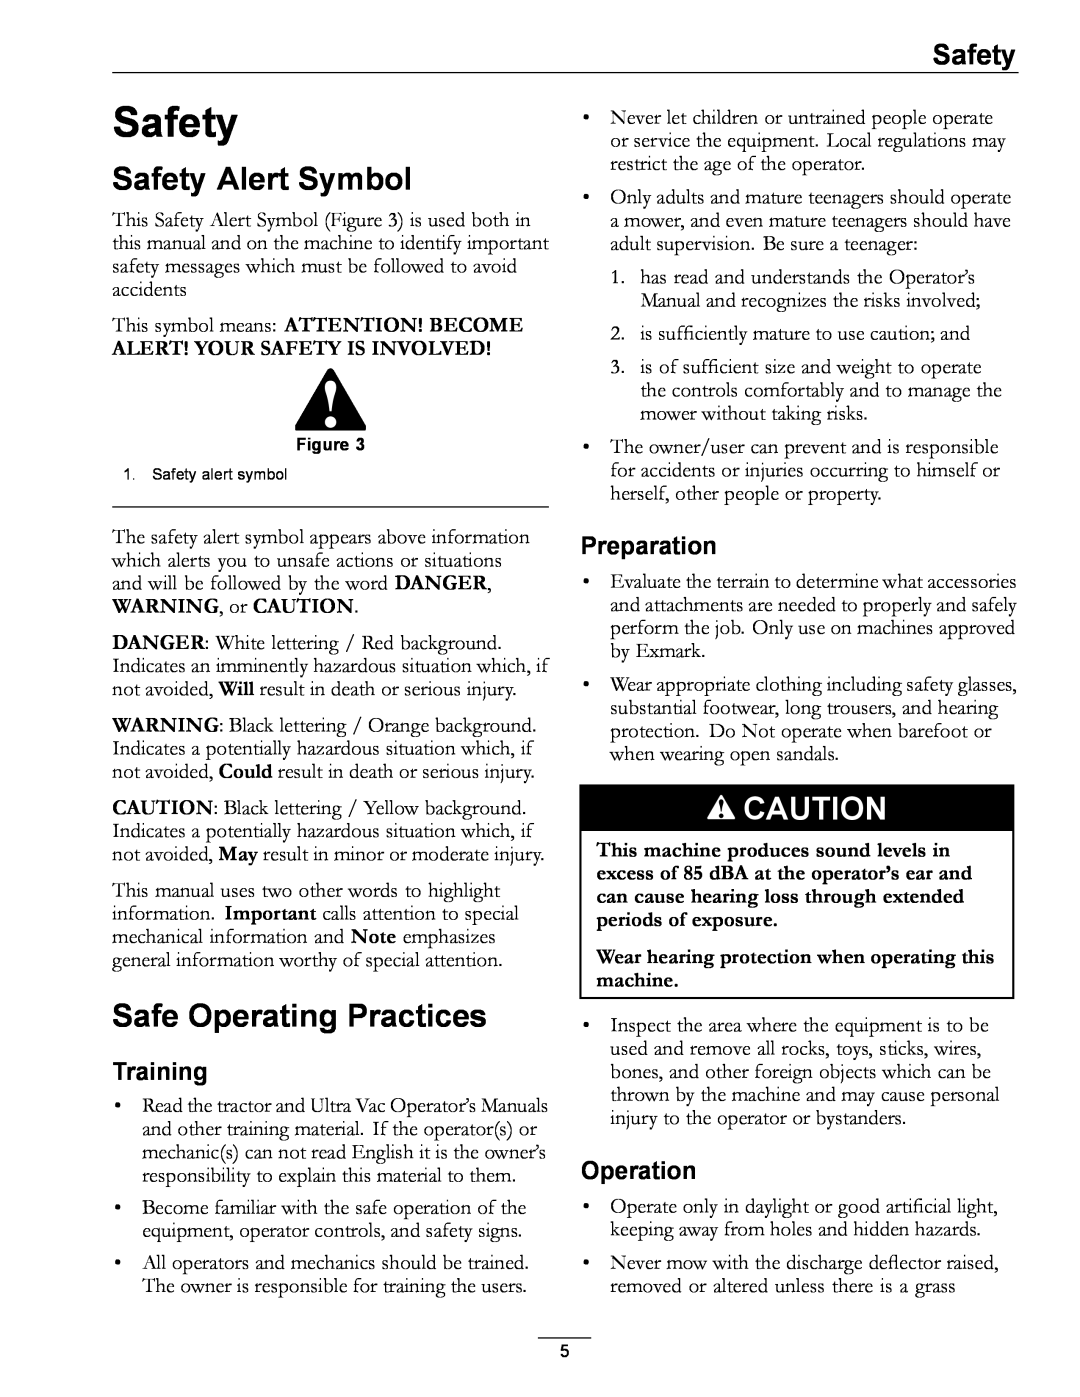 Exmark 00 & Higher, 850 manual Safety Alert Symbol, Safe Operating Practices, Training, Preparation, Operation 